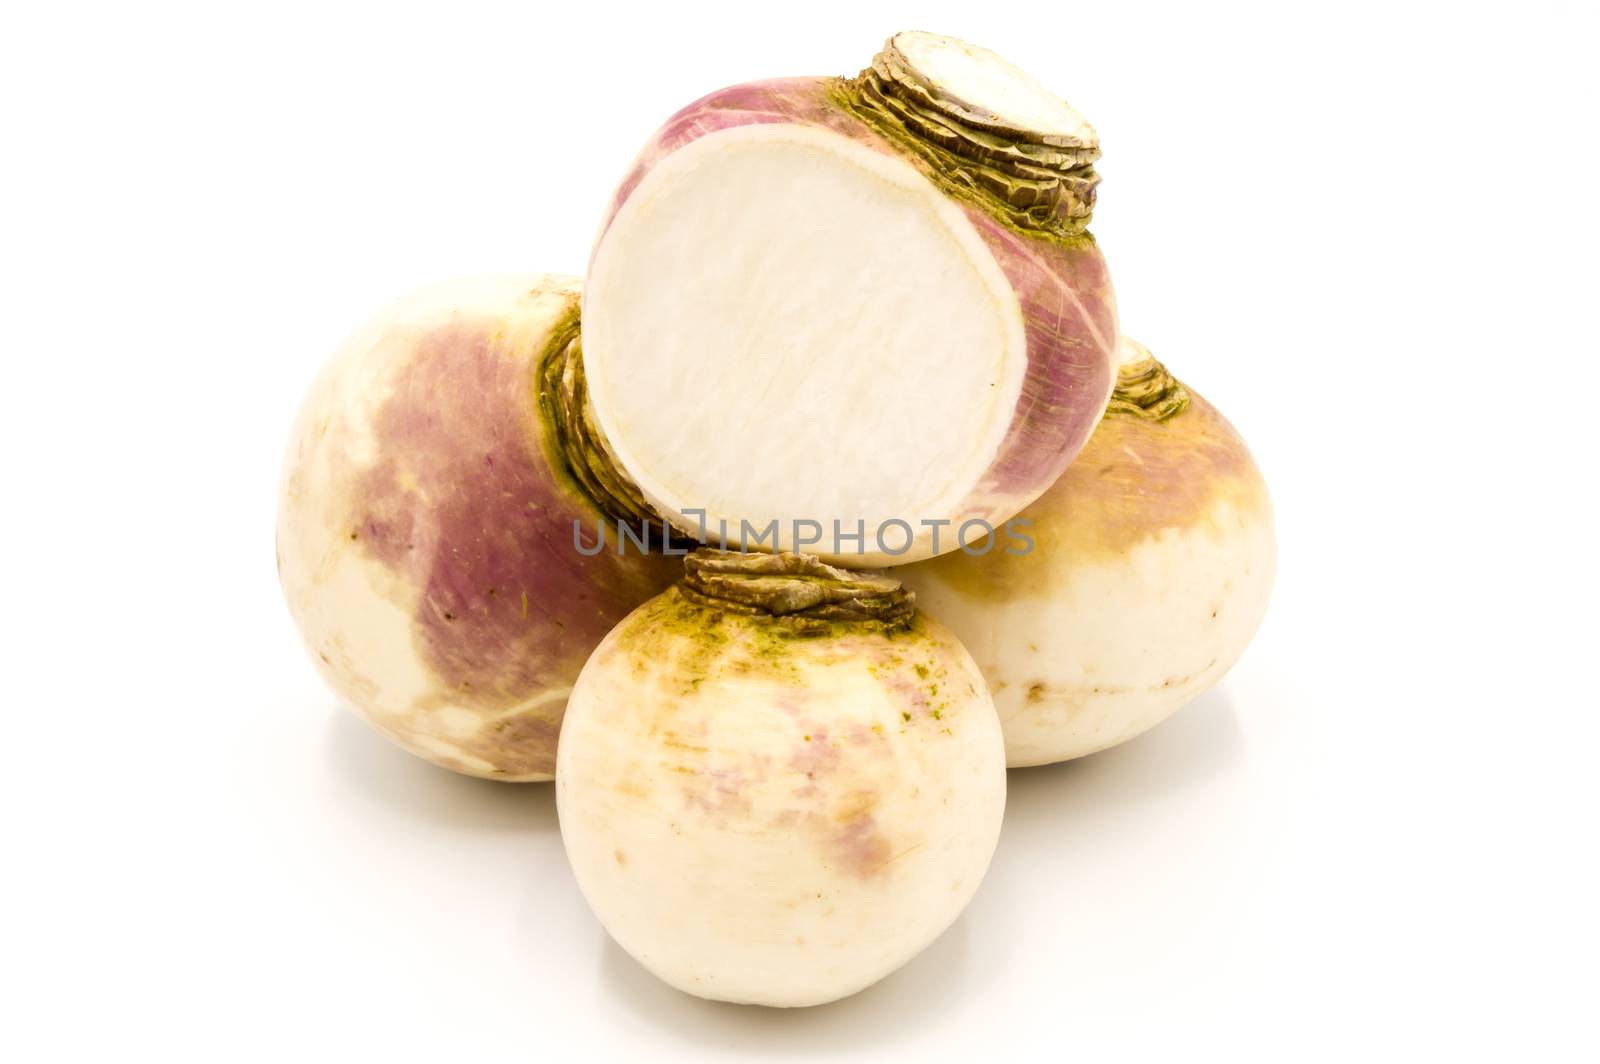 Freshly harvested spring turnips (Brassica rapa)  by Philou1000